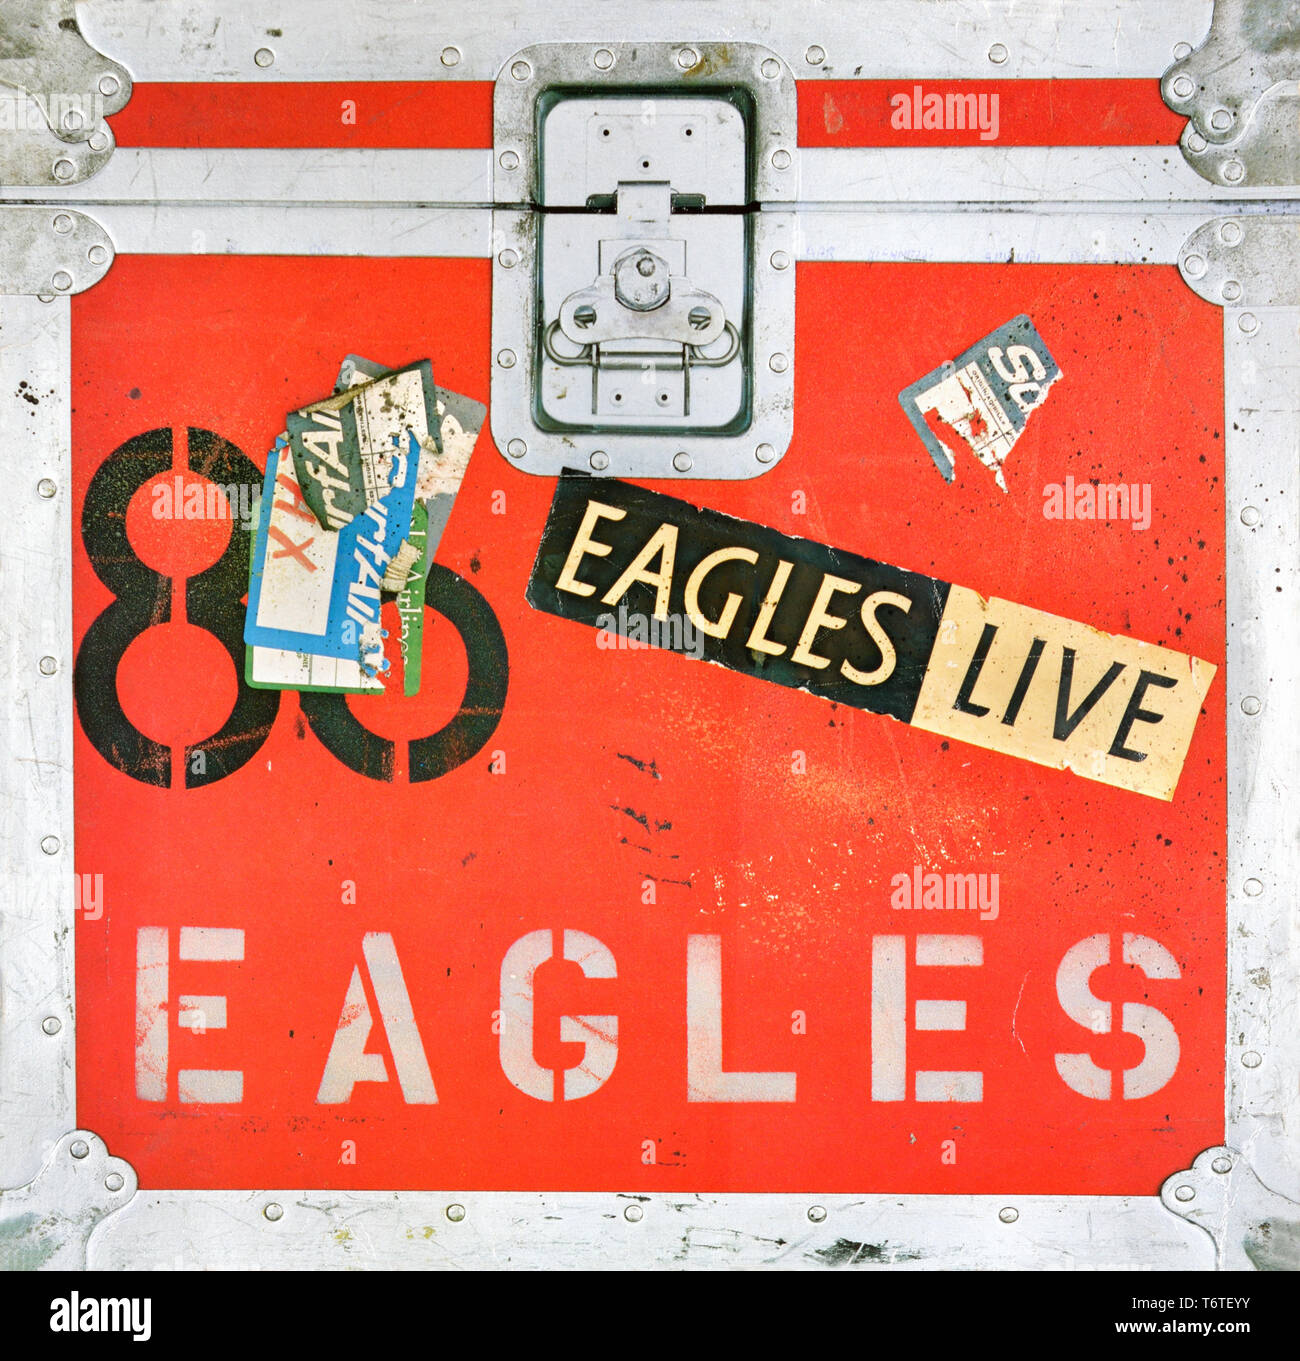 Eagles - original vinyl album cover - Eagles Live - 1980 Stock Photo